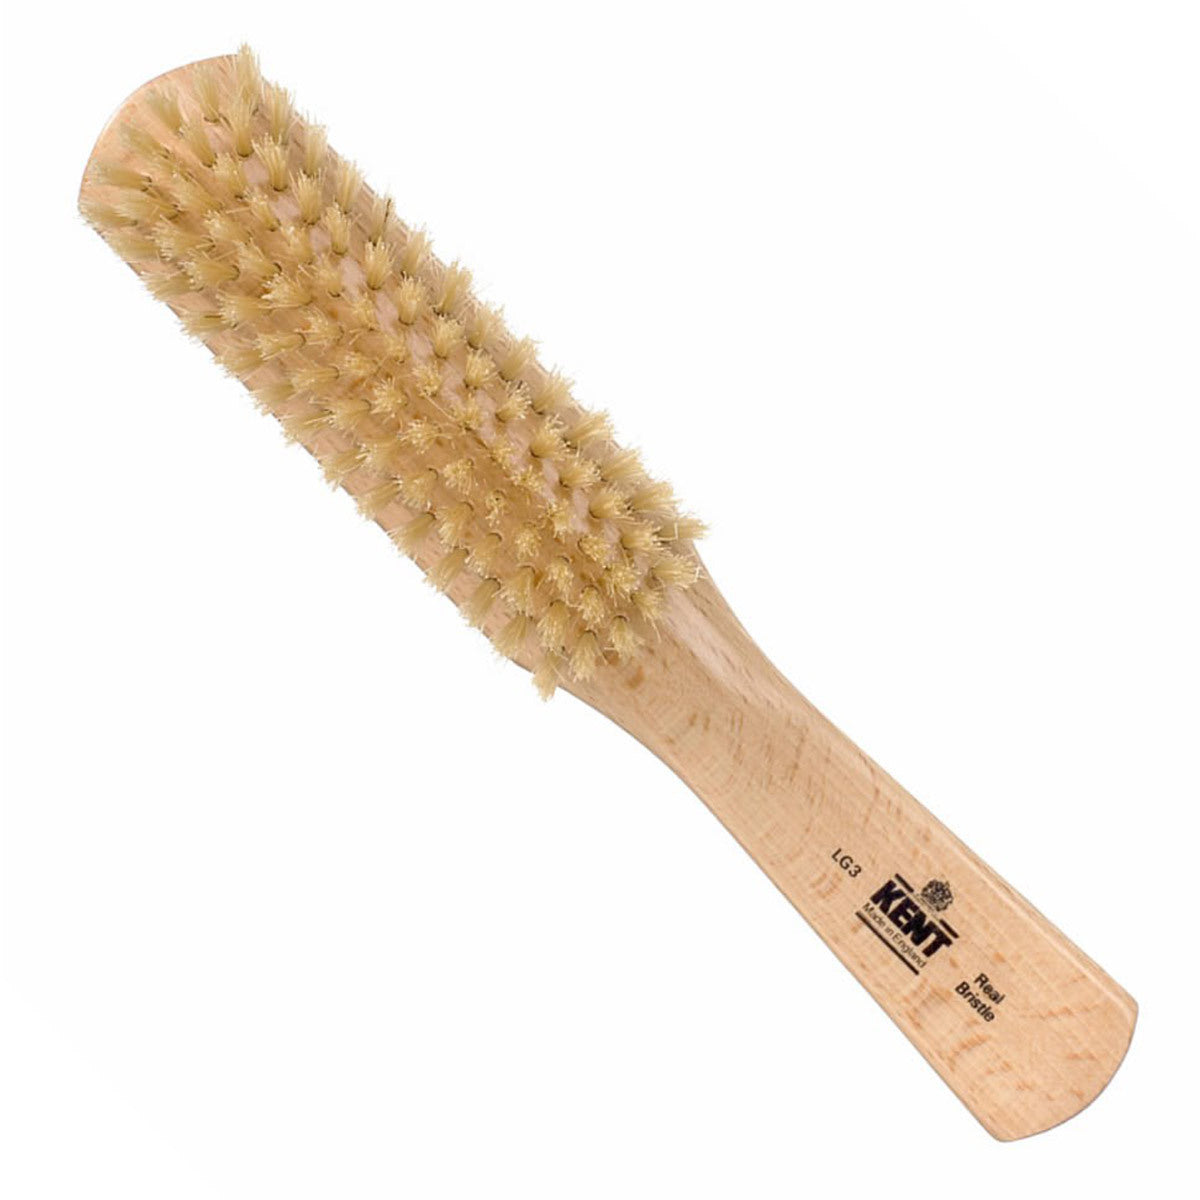 Primary image of Ladies' Narrow White Bristle Hairbrush - LG3